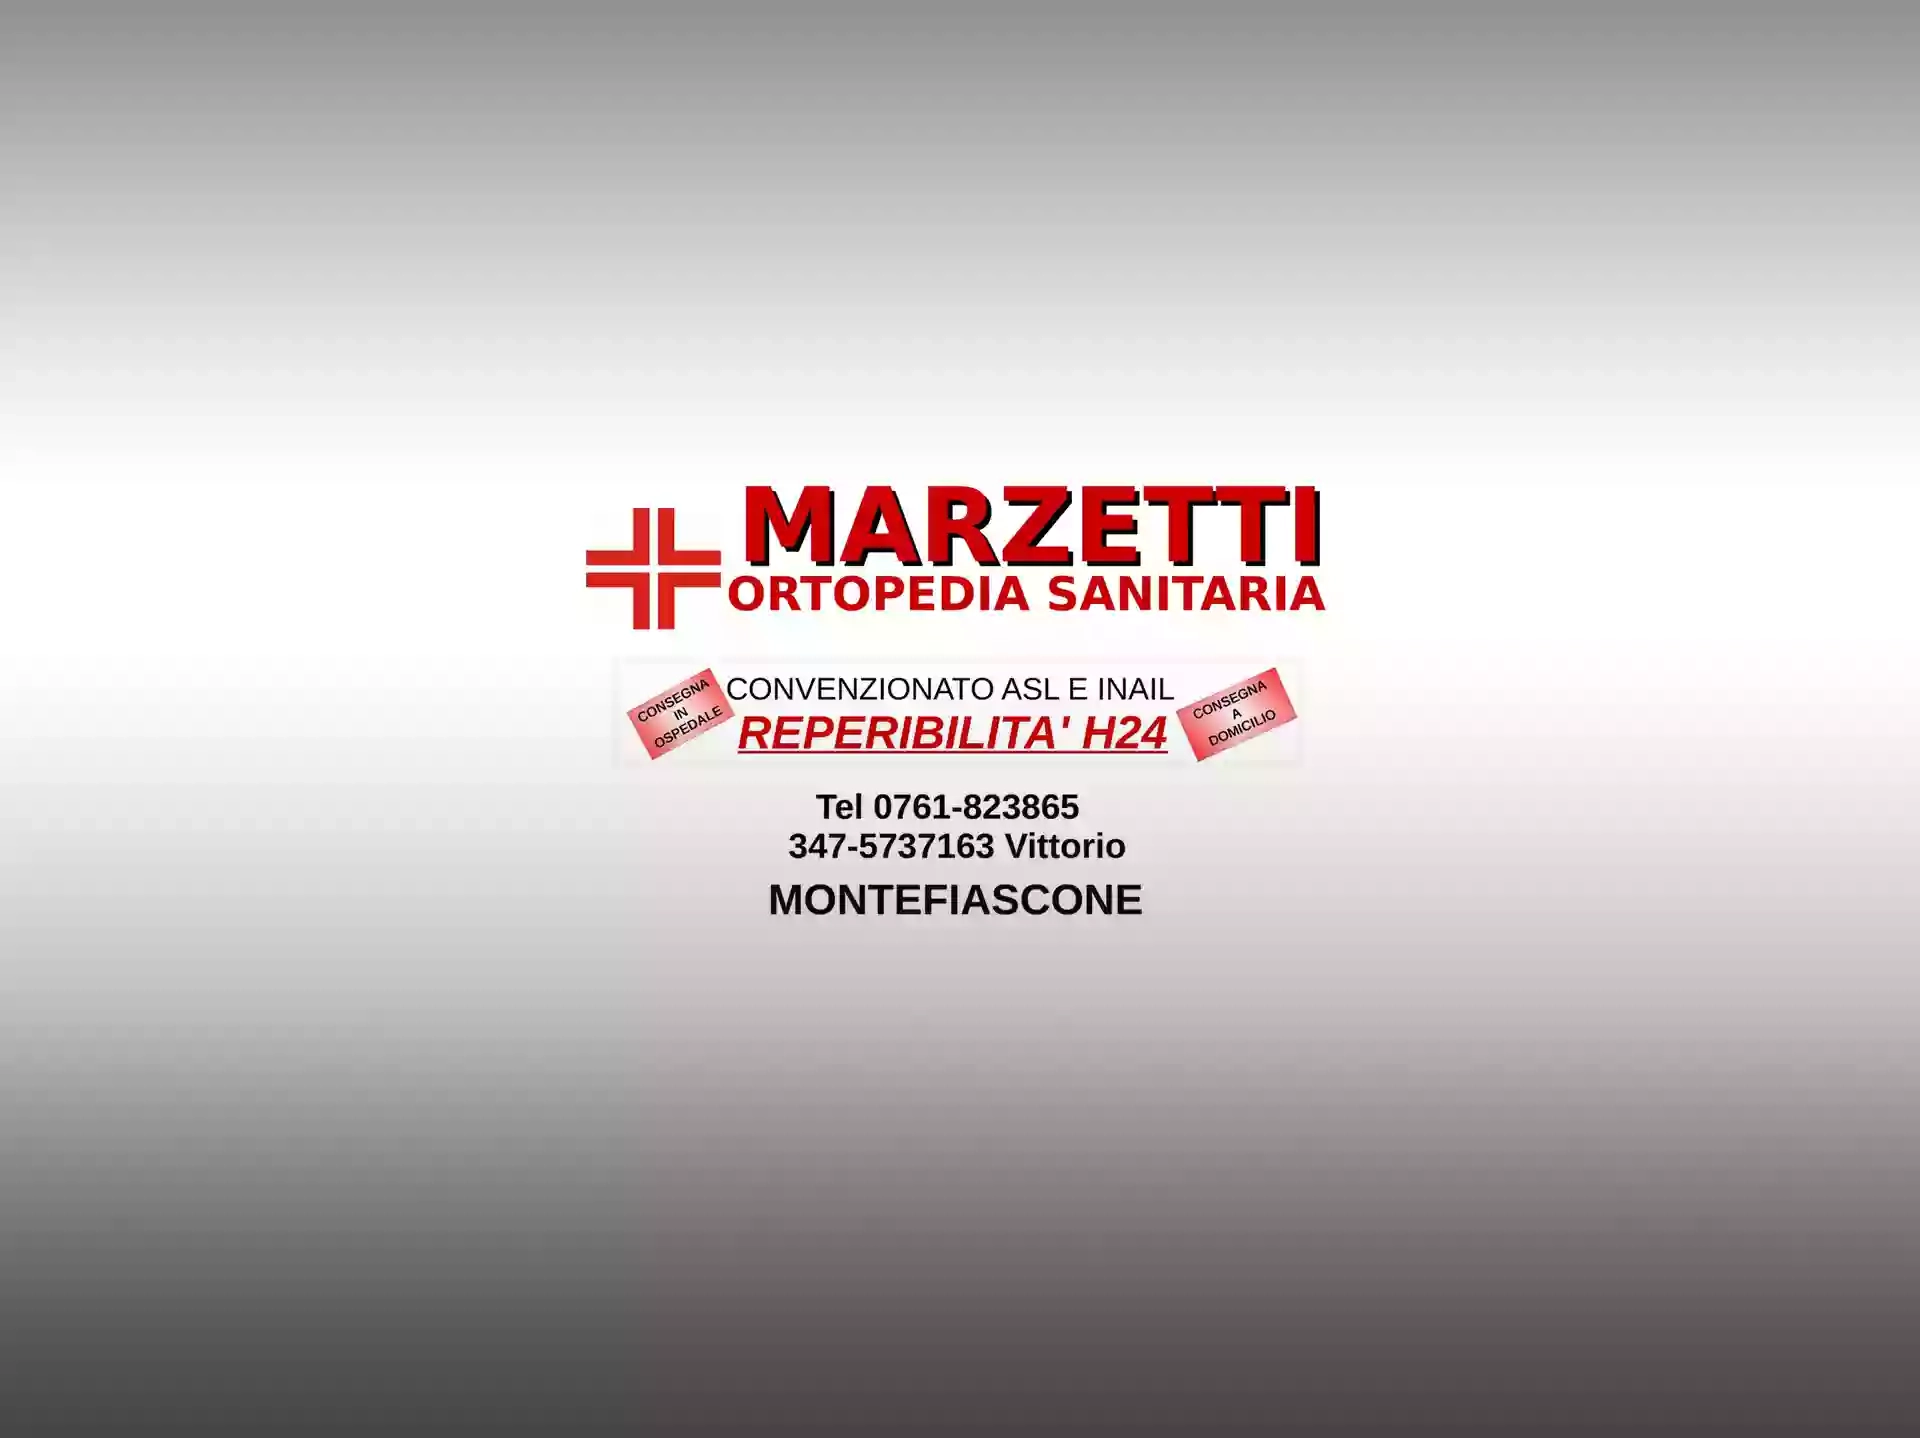 Sanitaria Ortopedia Marzetti